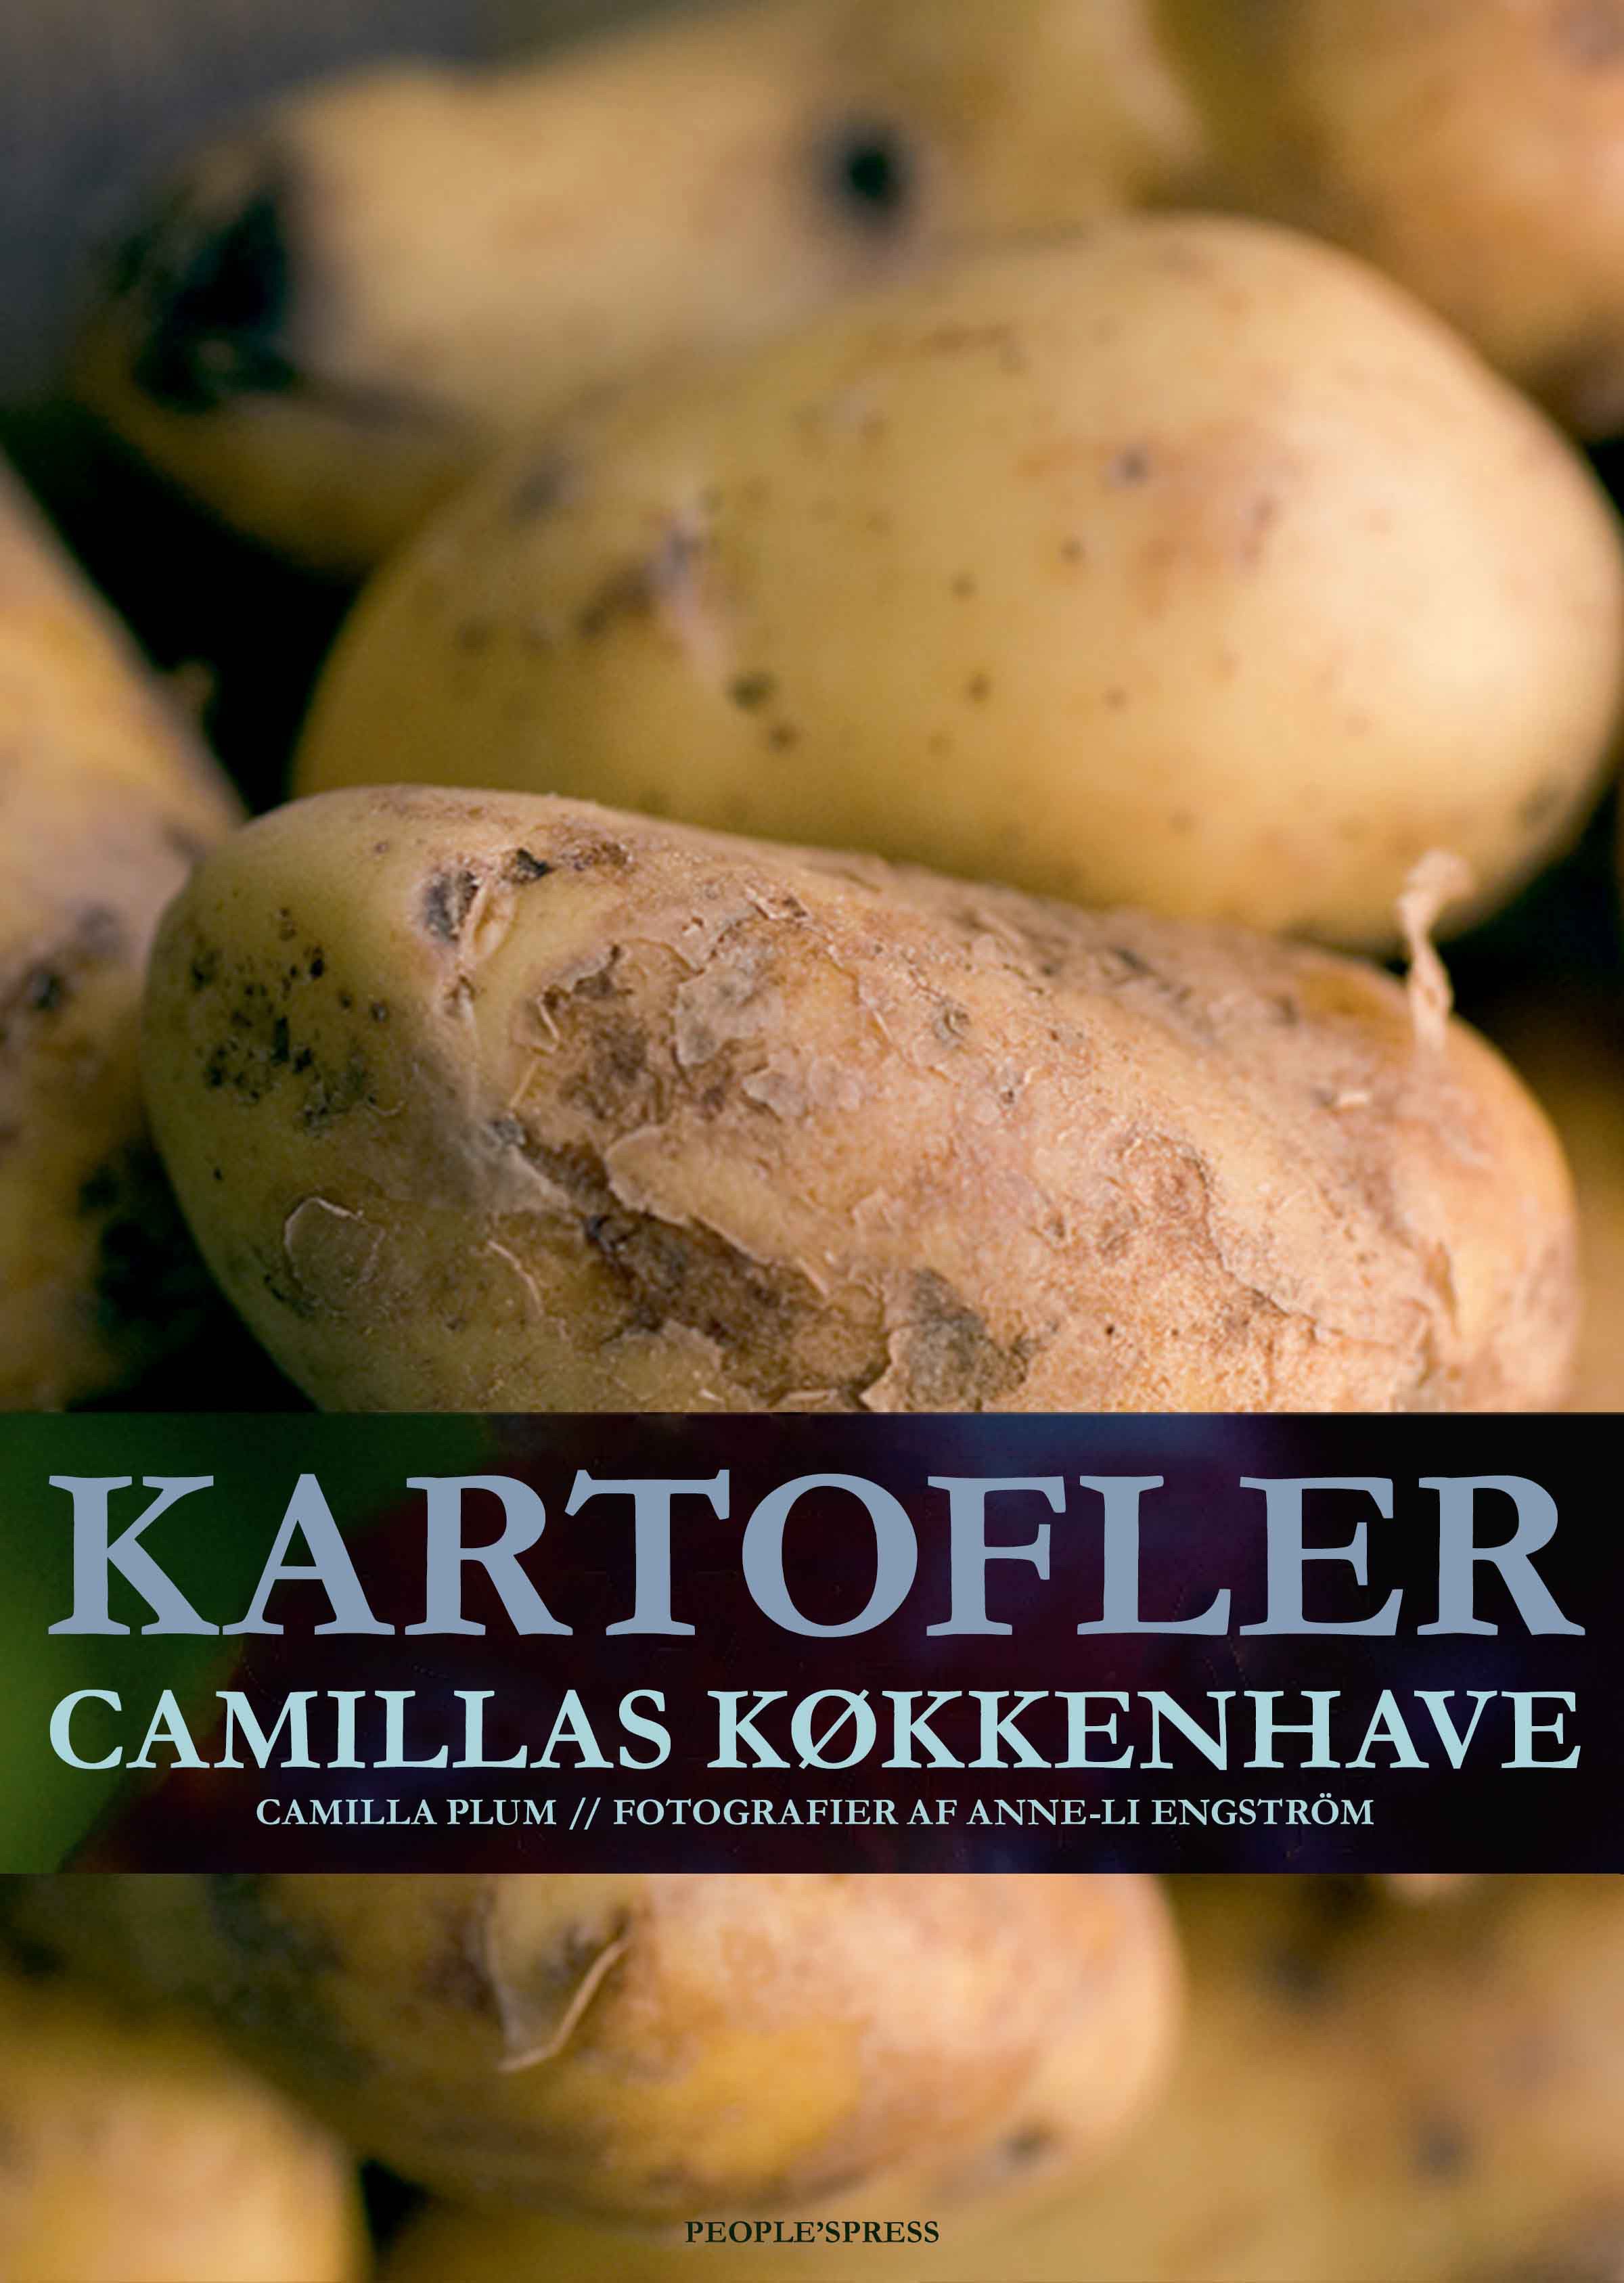 Kartofler - Camillas køkkenhave, eBook by Camilla Plum